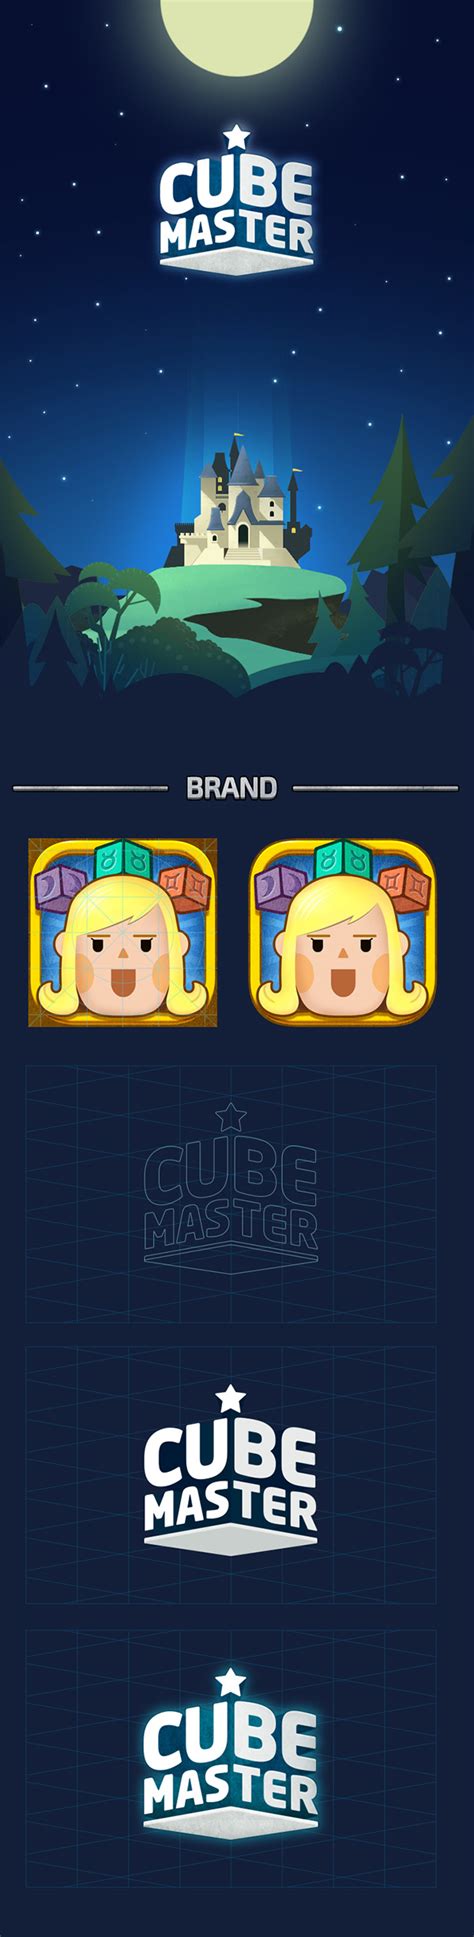 Cube Master Game Design on Behance